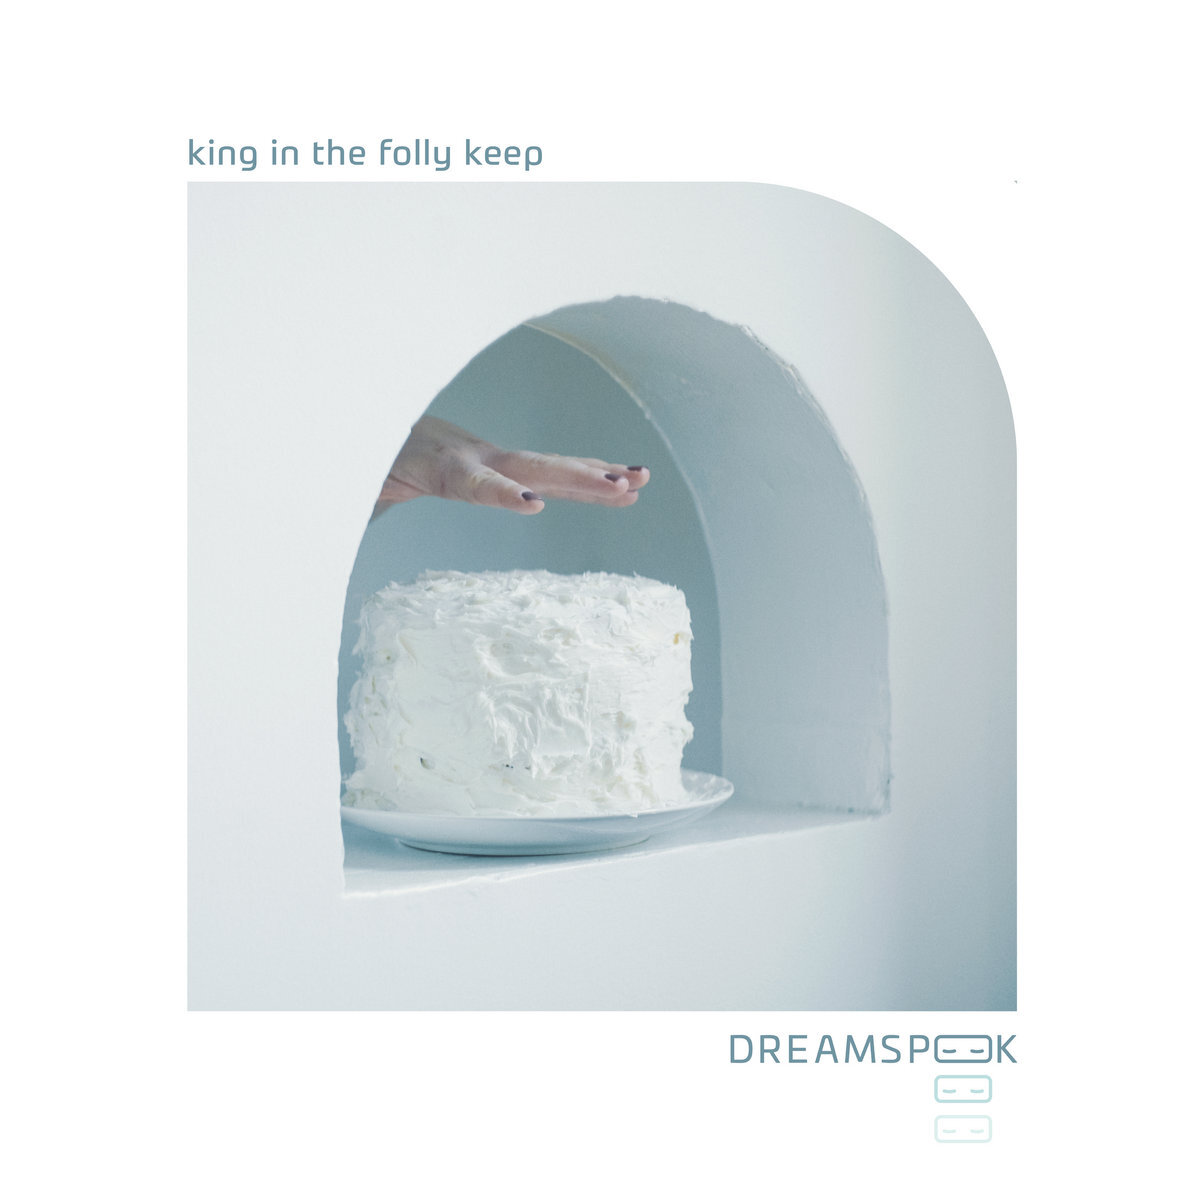 Dreamspook - 'King in the Folly Keep' (2017)